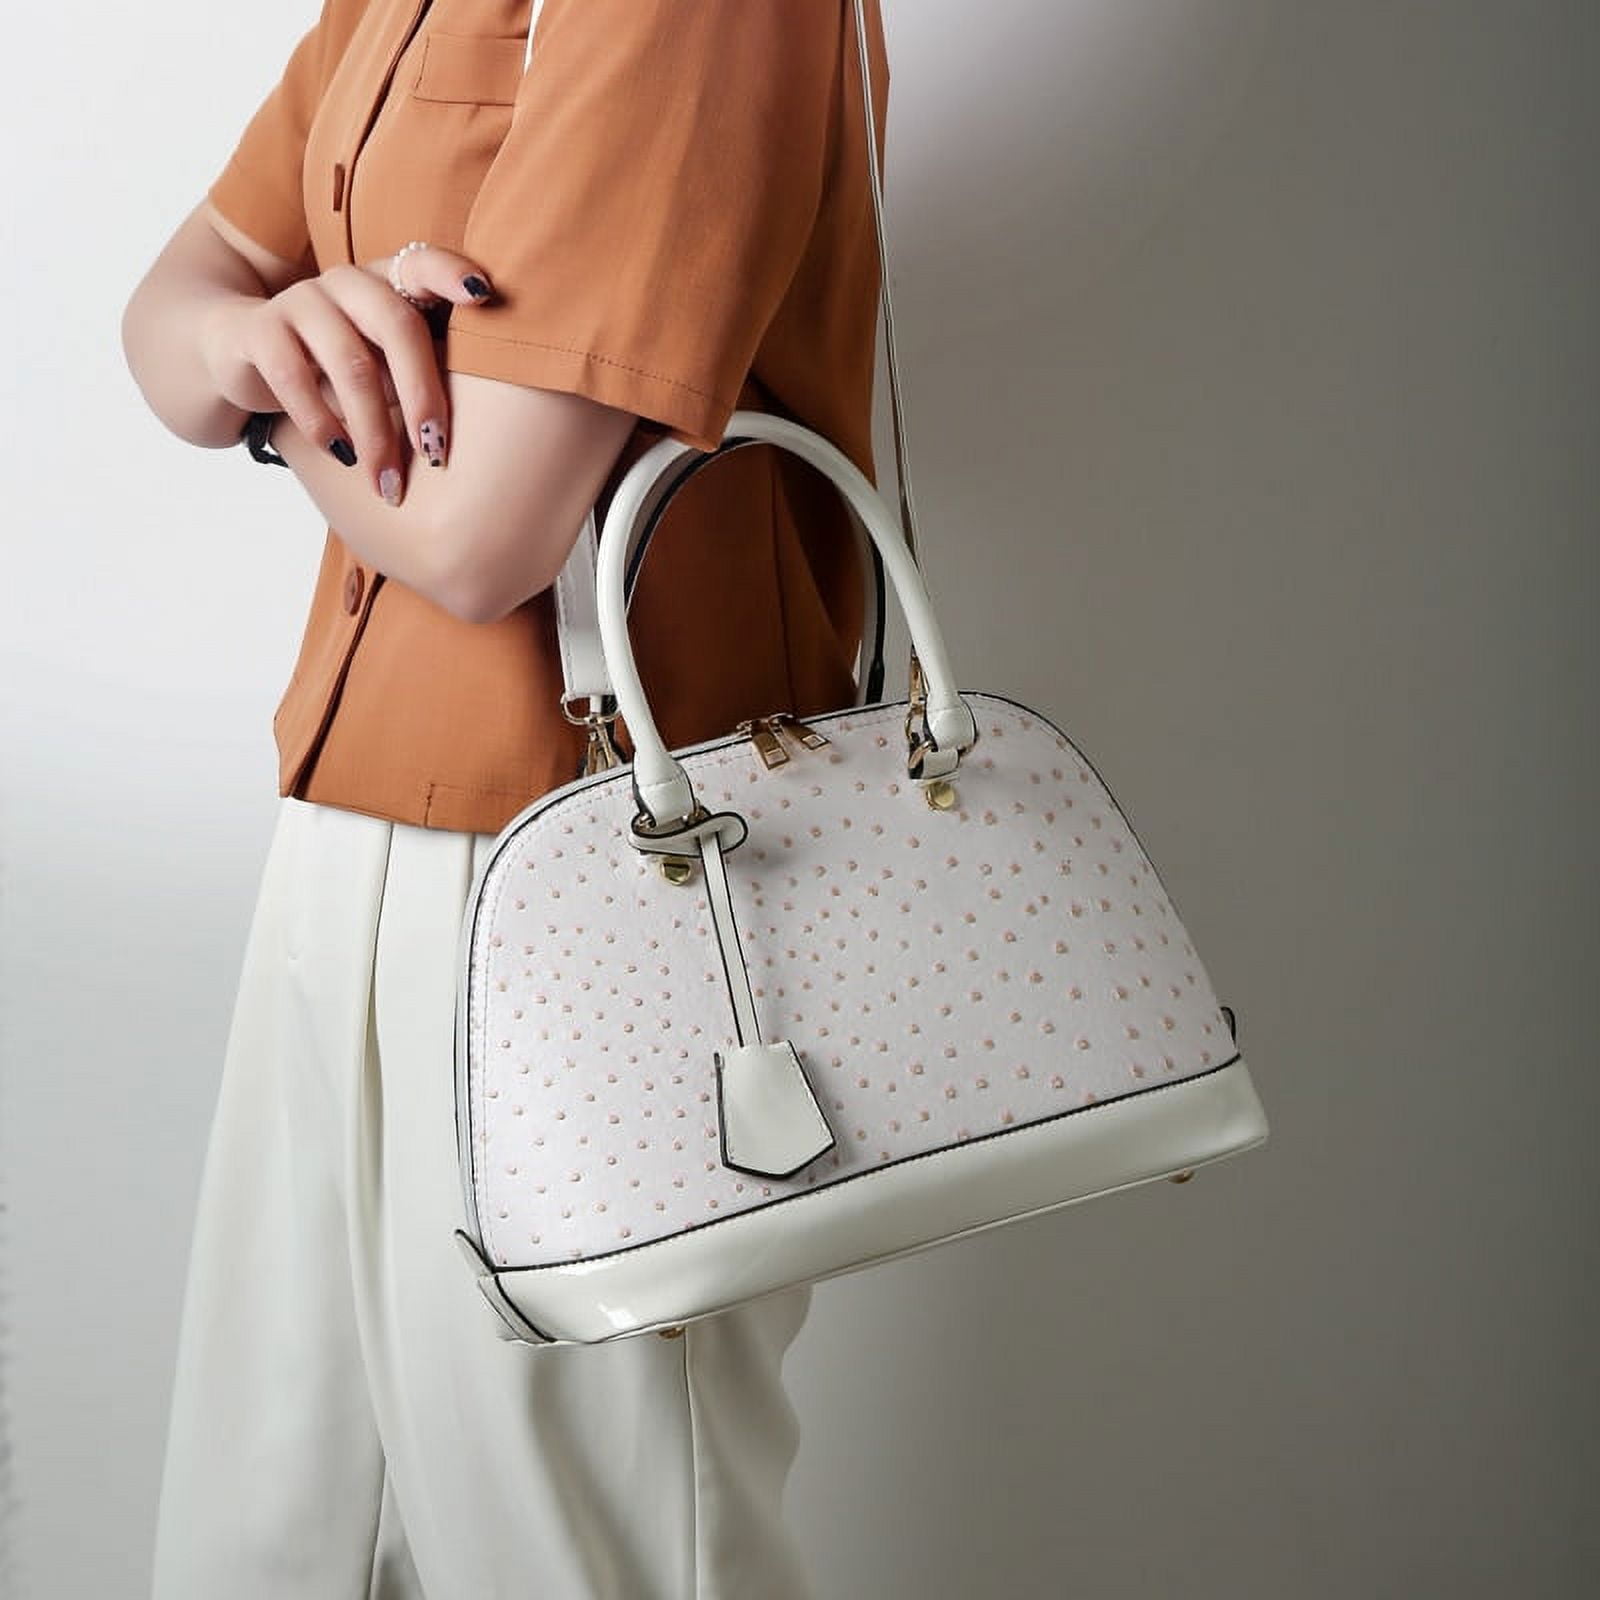 CoCopeaunt Top-handle Bags for Women Brand Designer Handbag Large